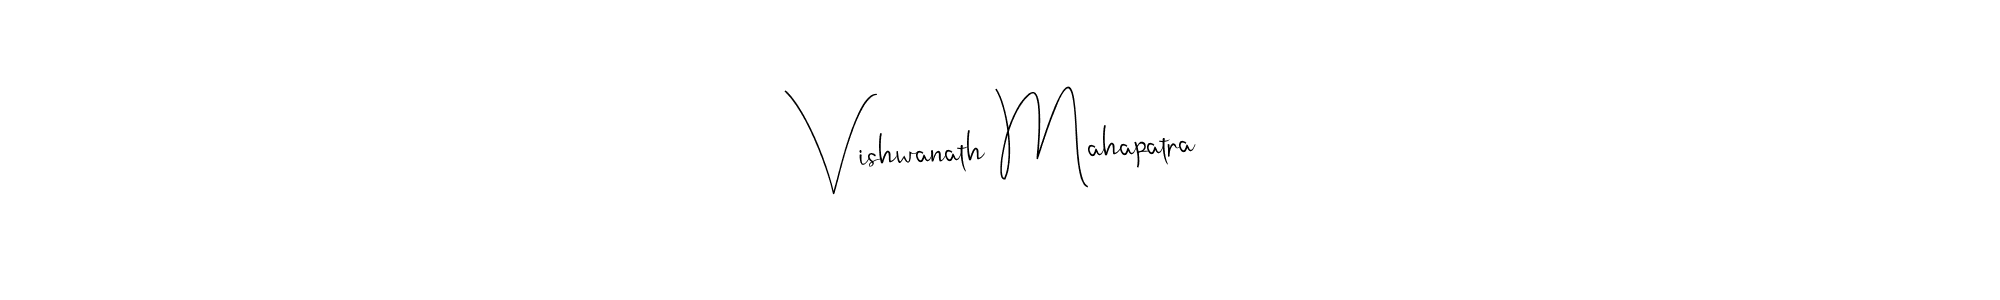 How to Draw Vishwanath Mahapatra signature style? Andilay-7BmLP is a latest design signature styles for name Vishwanath Mahapatra. Vishwanath Mahapatra signature style 4 images and pictures png